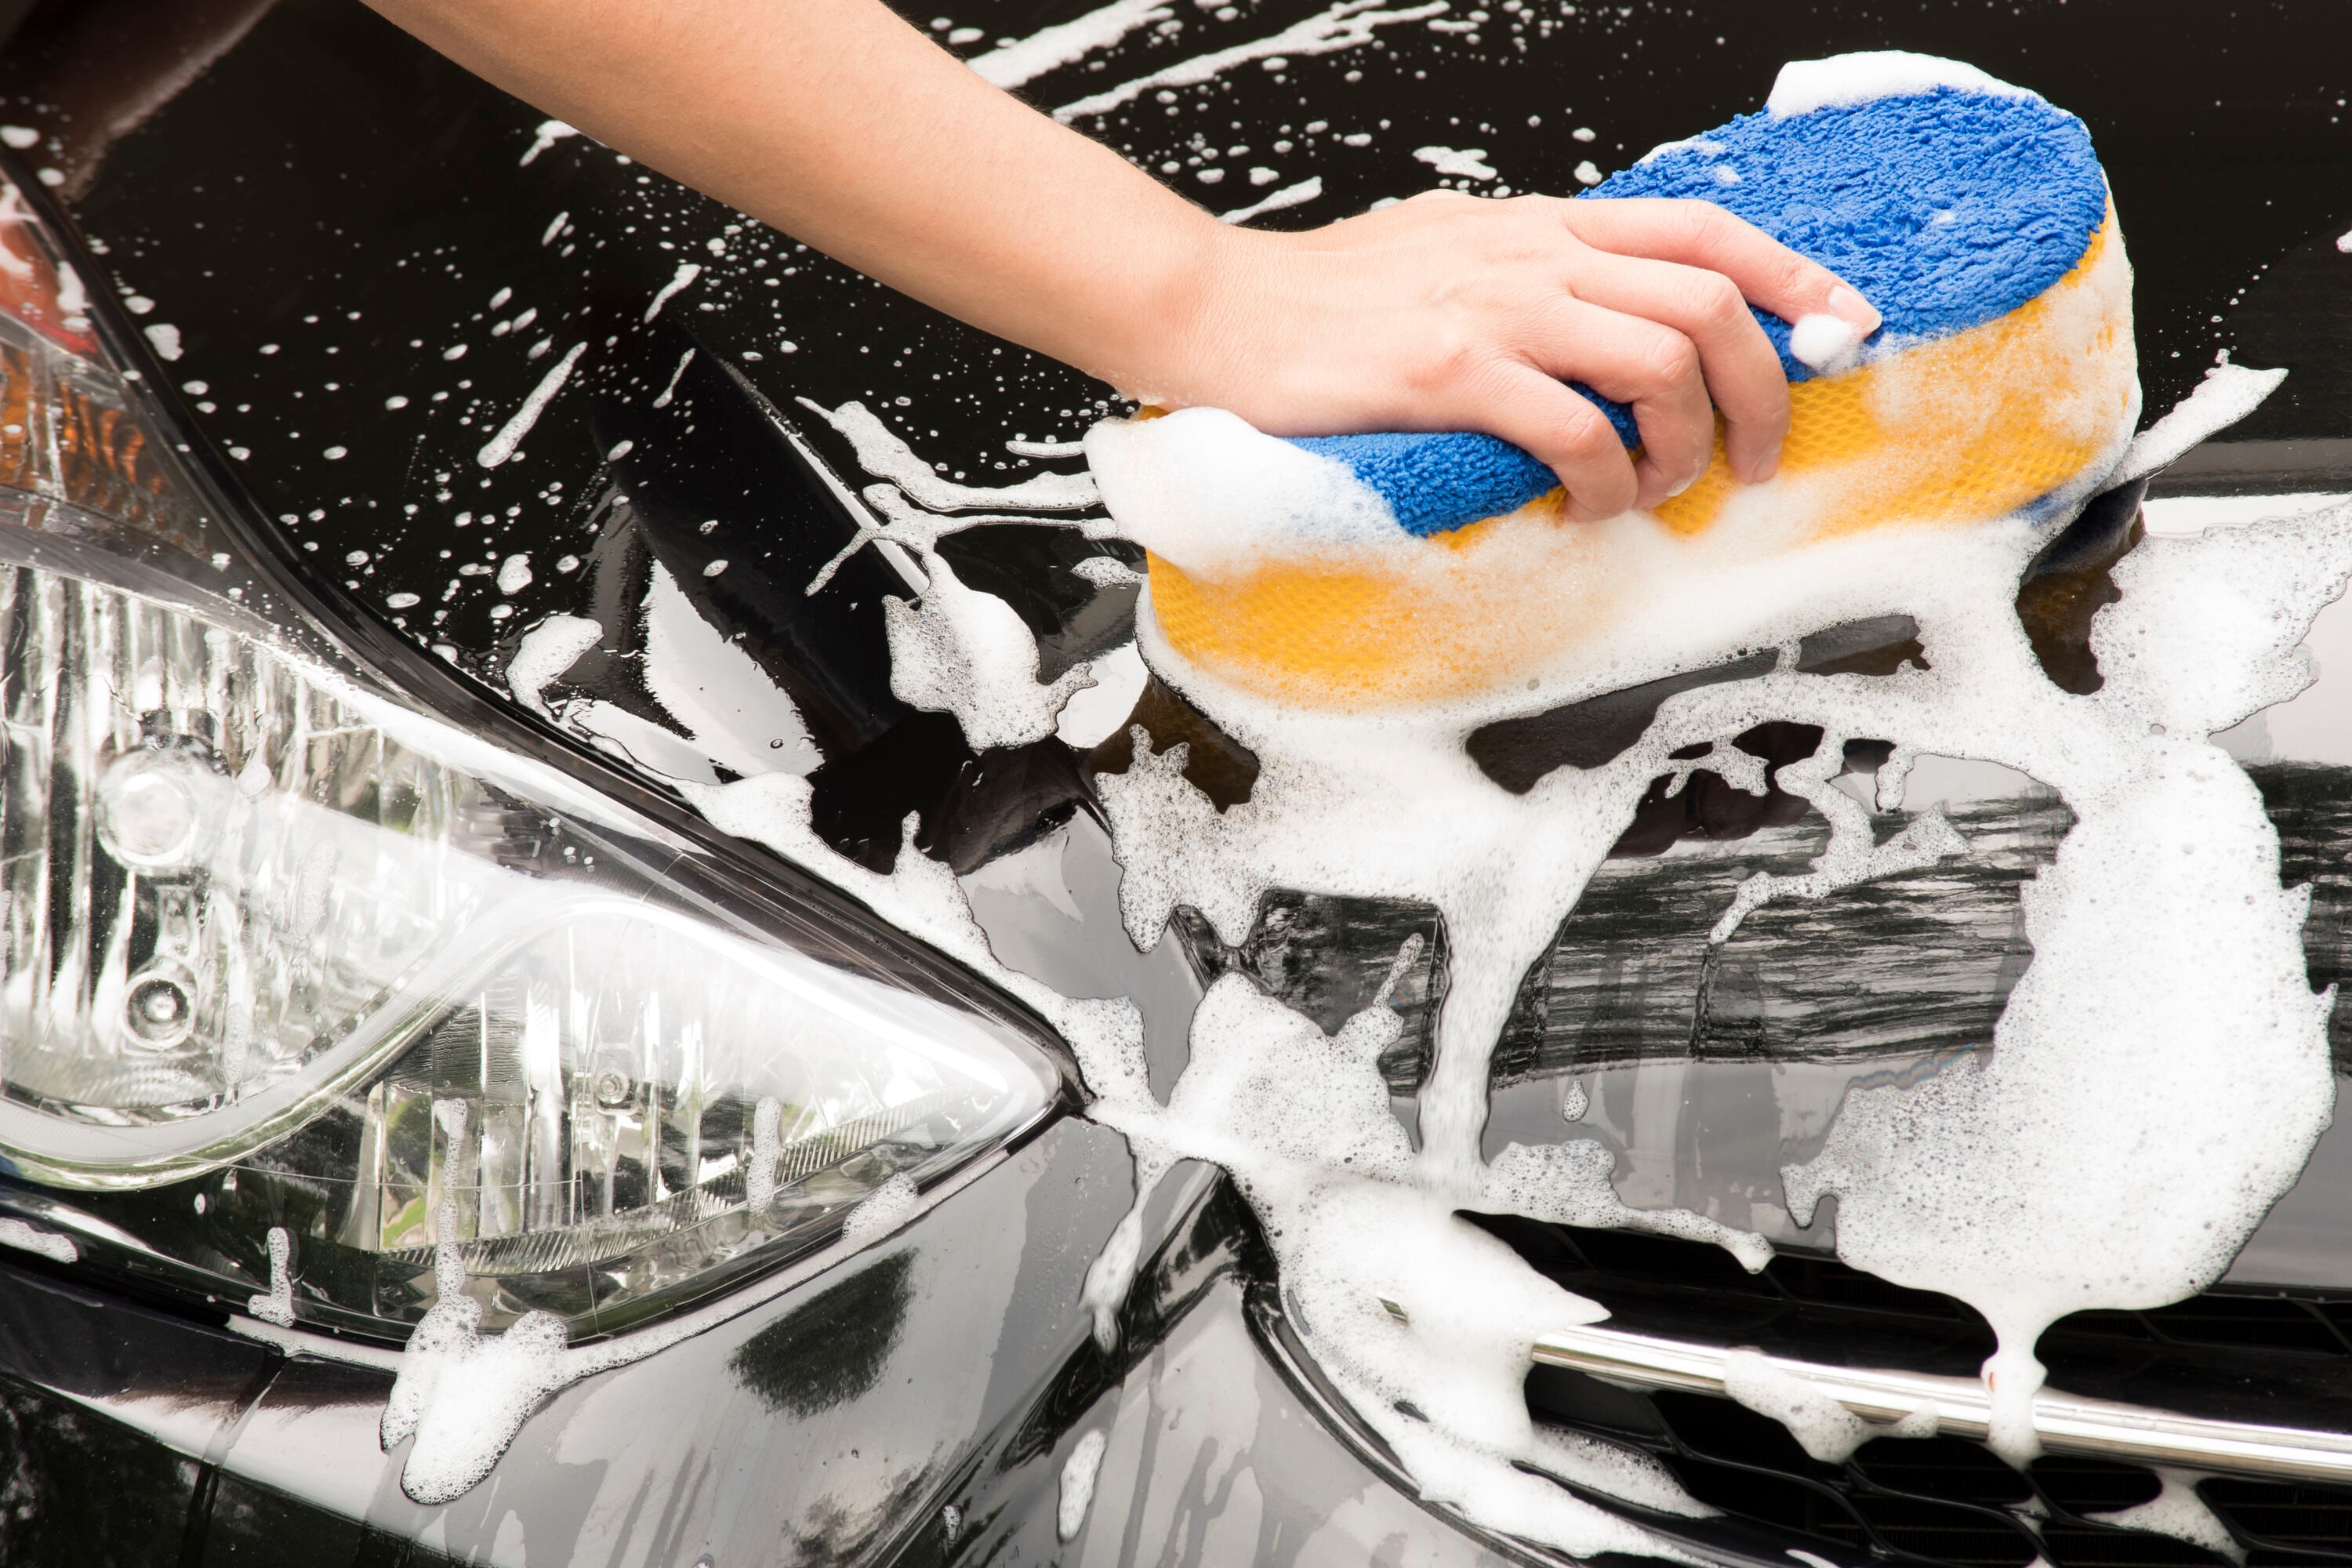 Car Wash Sponges, Jumbo Car Sponges for Washing Ultra Soft Large